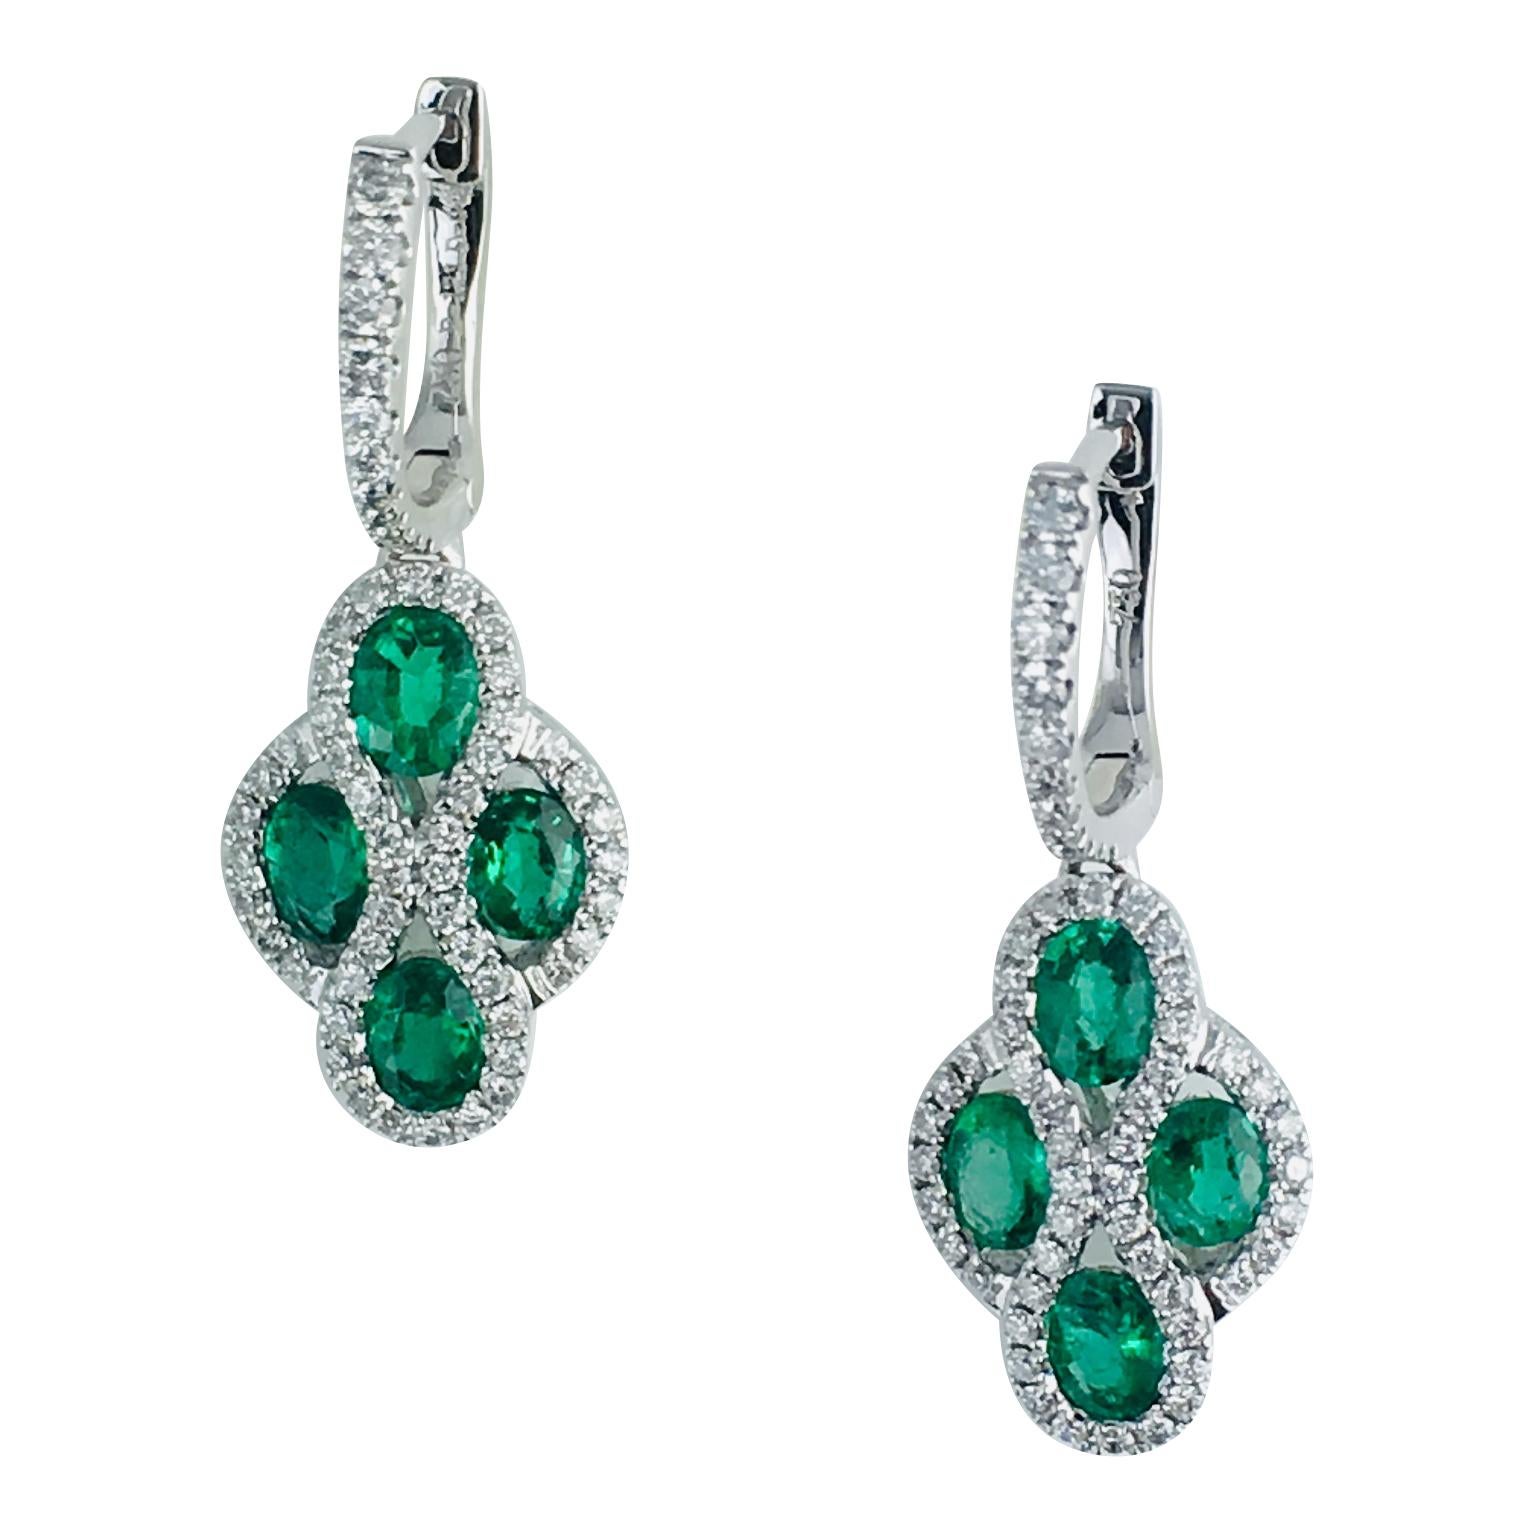 1.23 Carat Fine Emerald and Diamond Earrings in 18 Karat White Gold